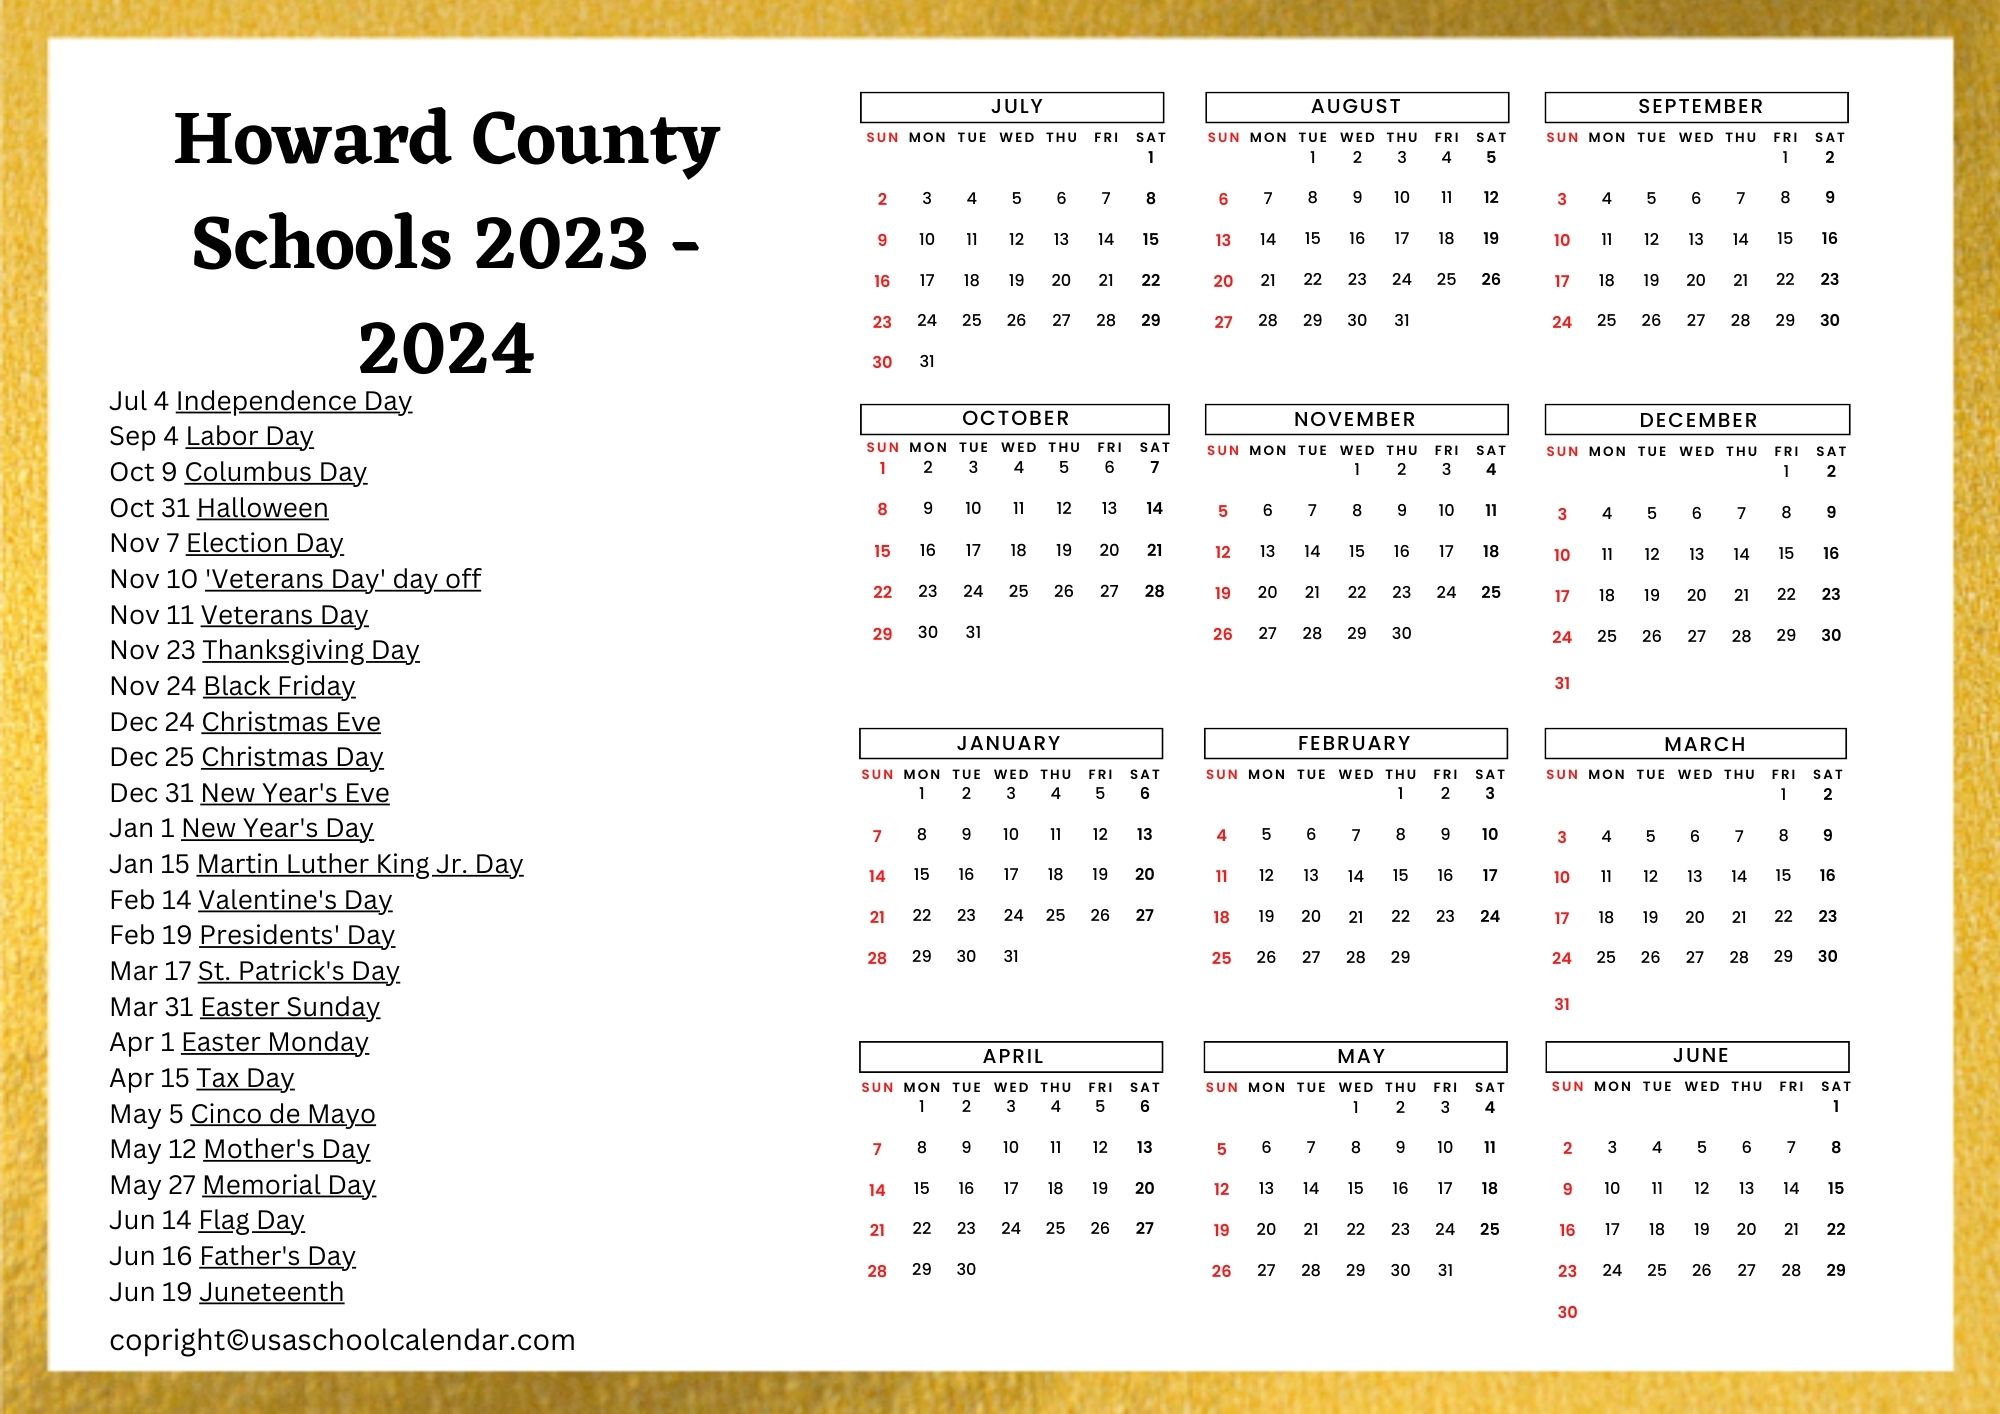 Howard County Schools Calendar Holidays 2023 2024